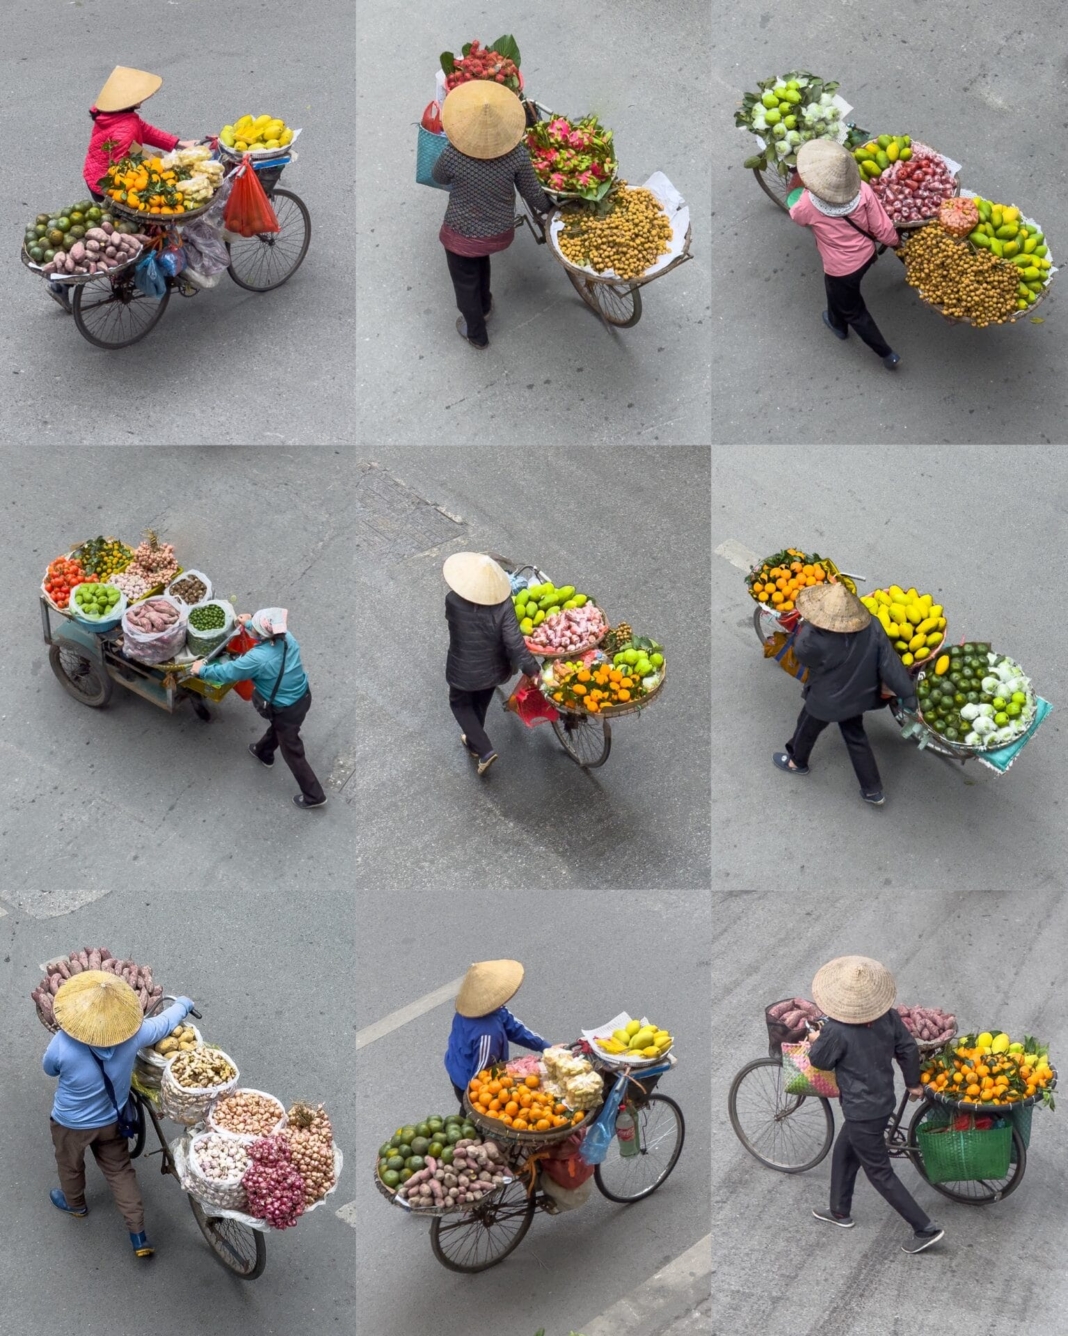 Trung Dong’s Aerial Street Photos Highlight the Fruit Merchants of Hanoi